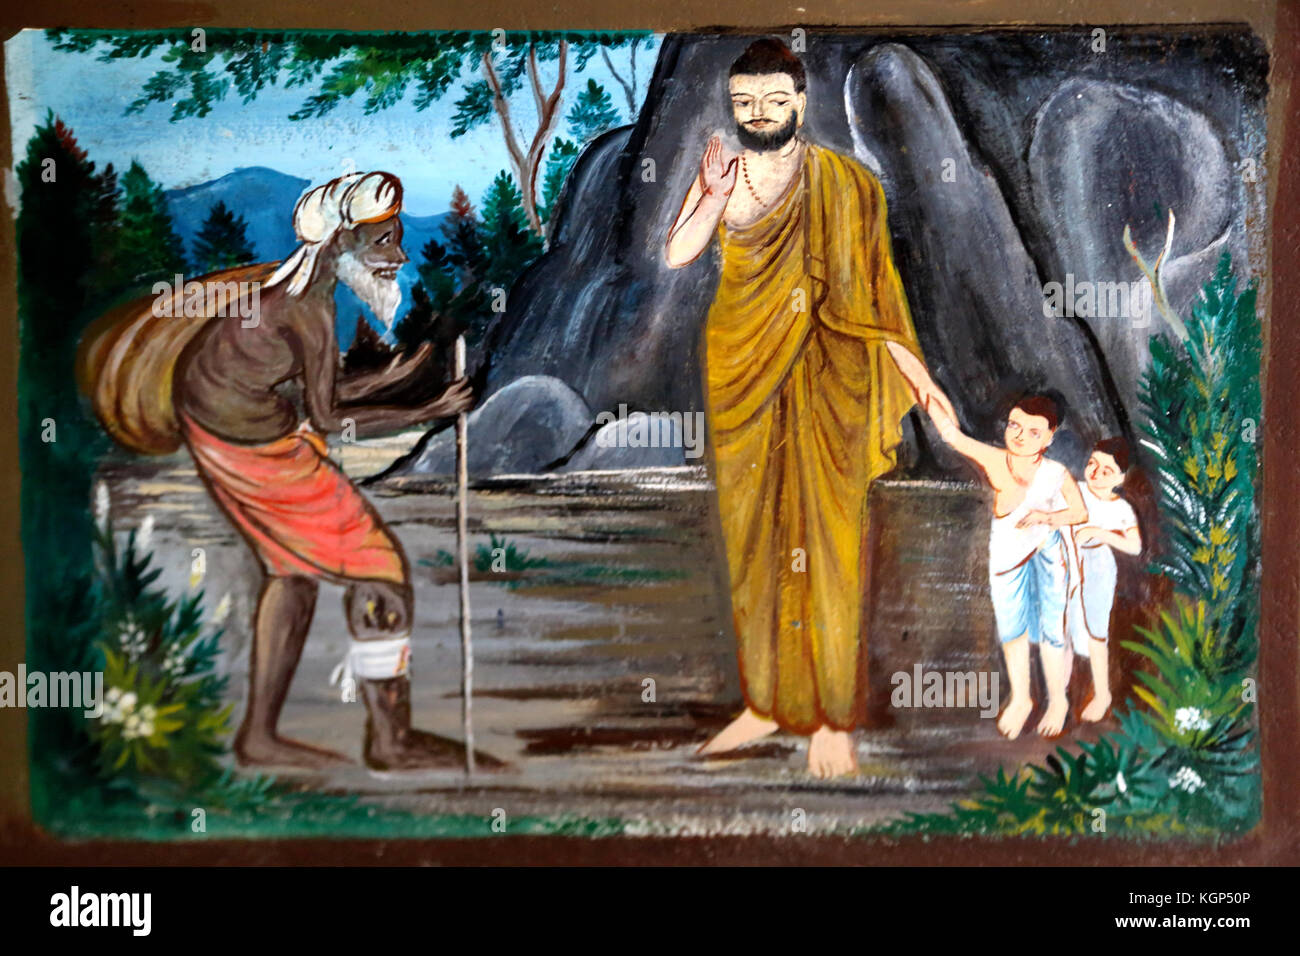 Galle Sri Lanka Sri-Vivekaramaya Rumassala Temple Road Peinture dépeignant la vie de Bouddha Banque D'Images